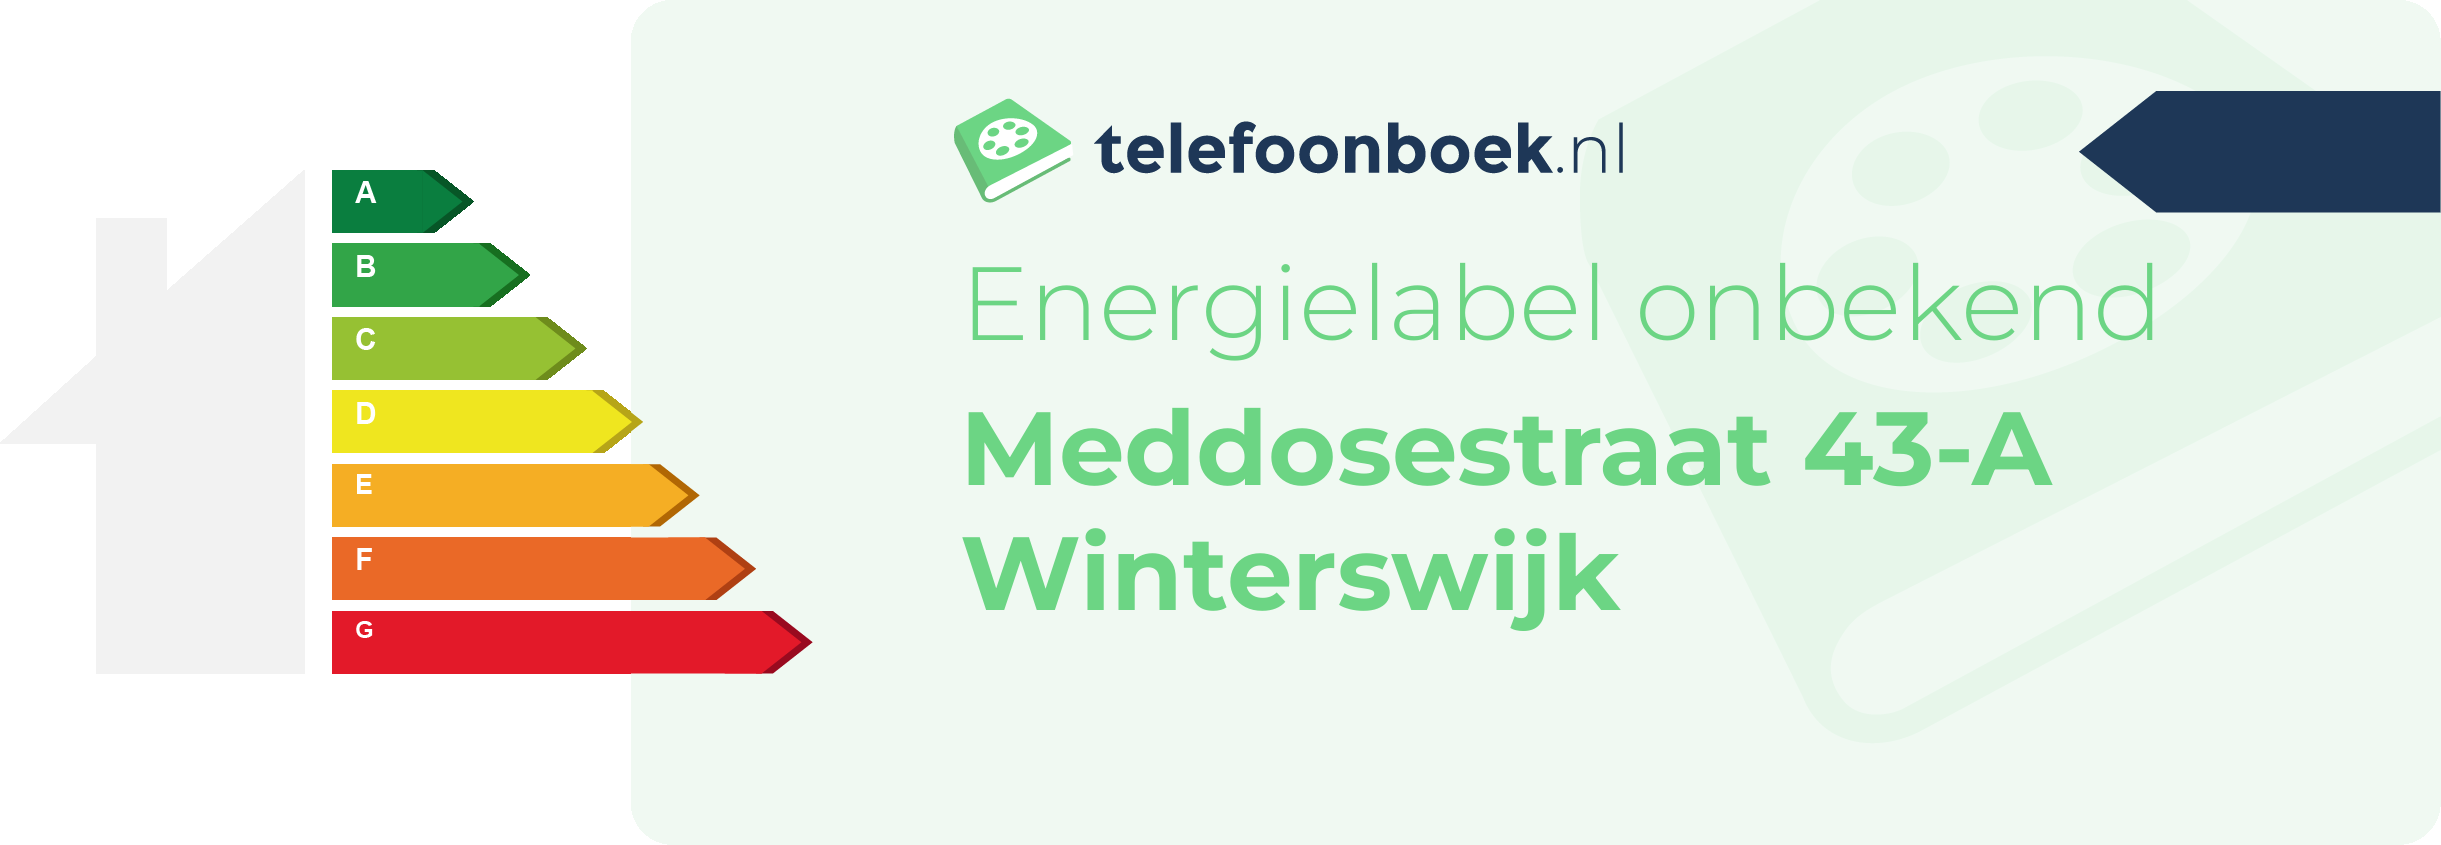 Energielabel Meddosestraat 43-A Winterswijk